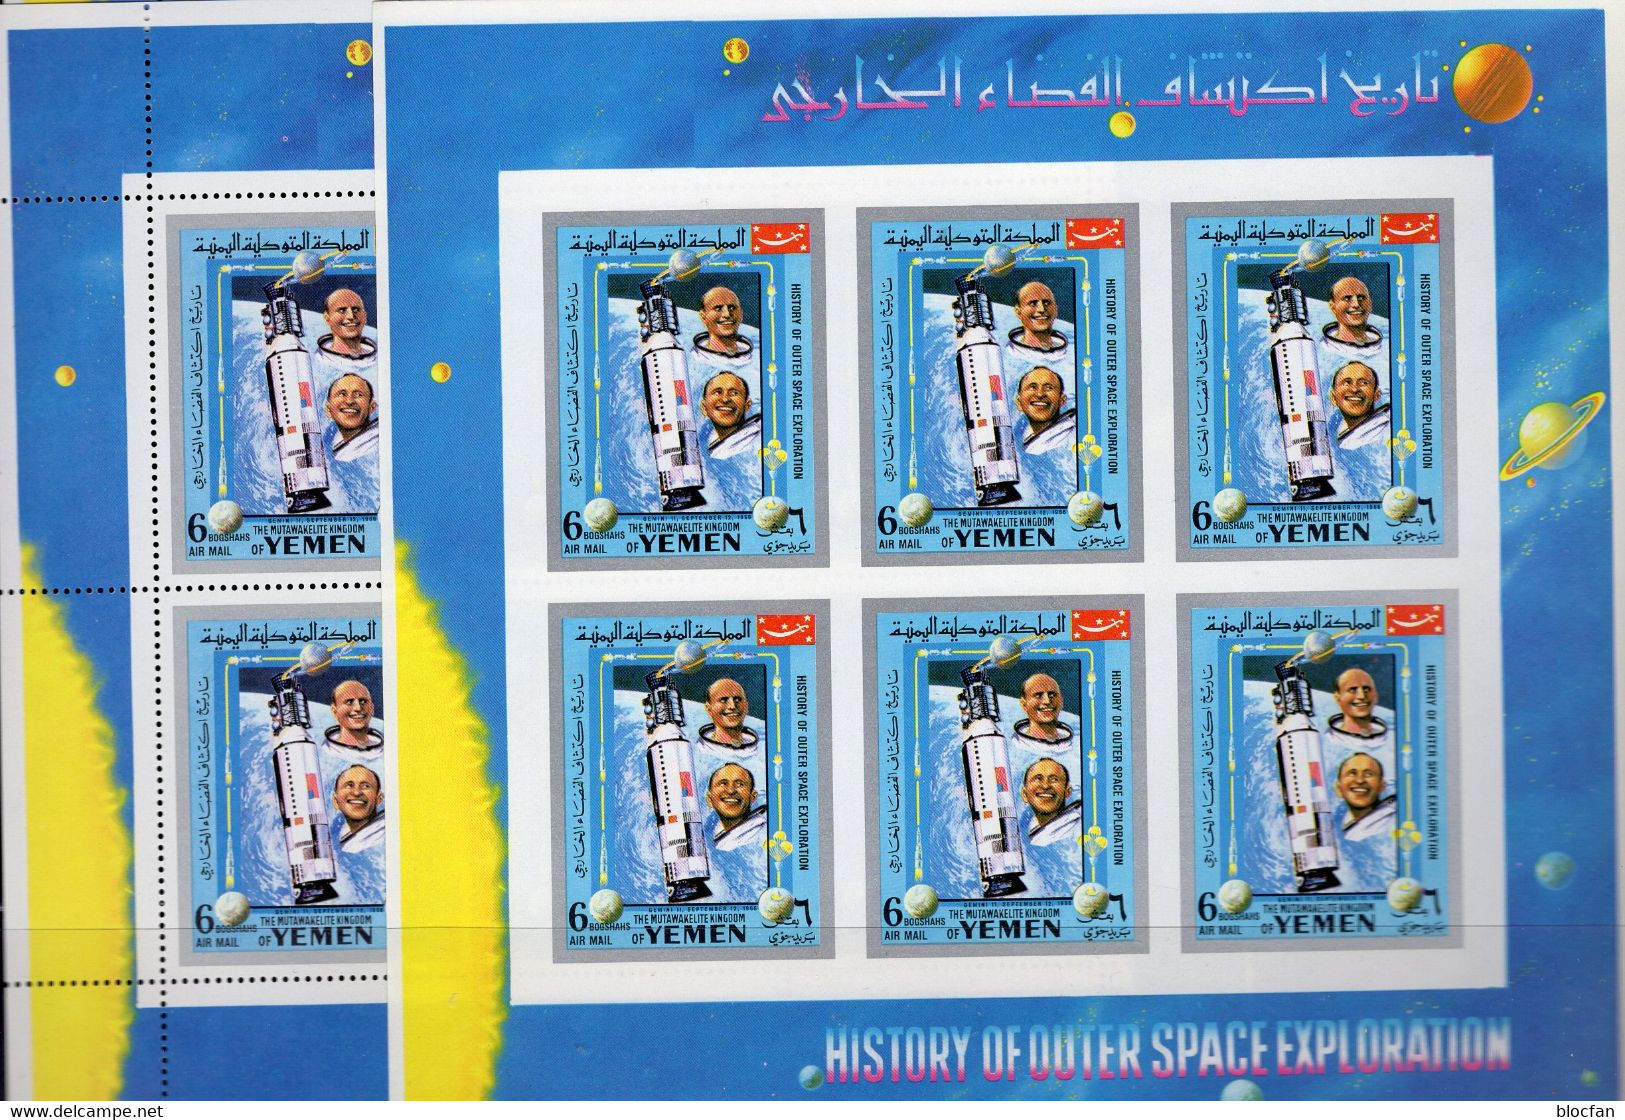 Astronauten 1966 Jemen 876 Kleinbogen A/B ** 12€ Rakete Gemini 11 Sheets Hoja Sheetlets Bf History Space Exploration - Perforiert/Gezähnt